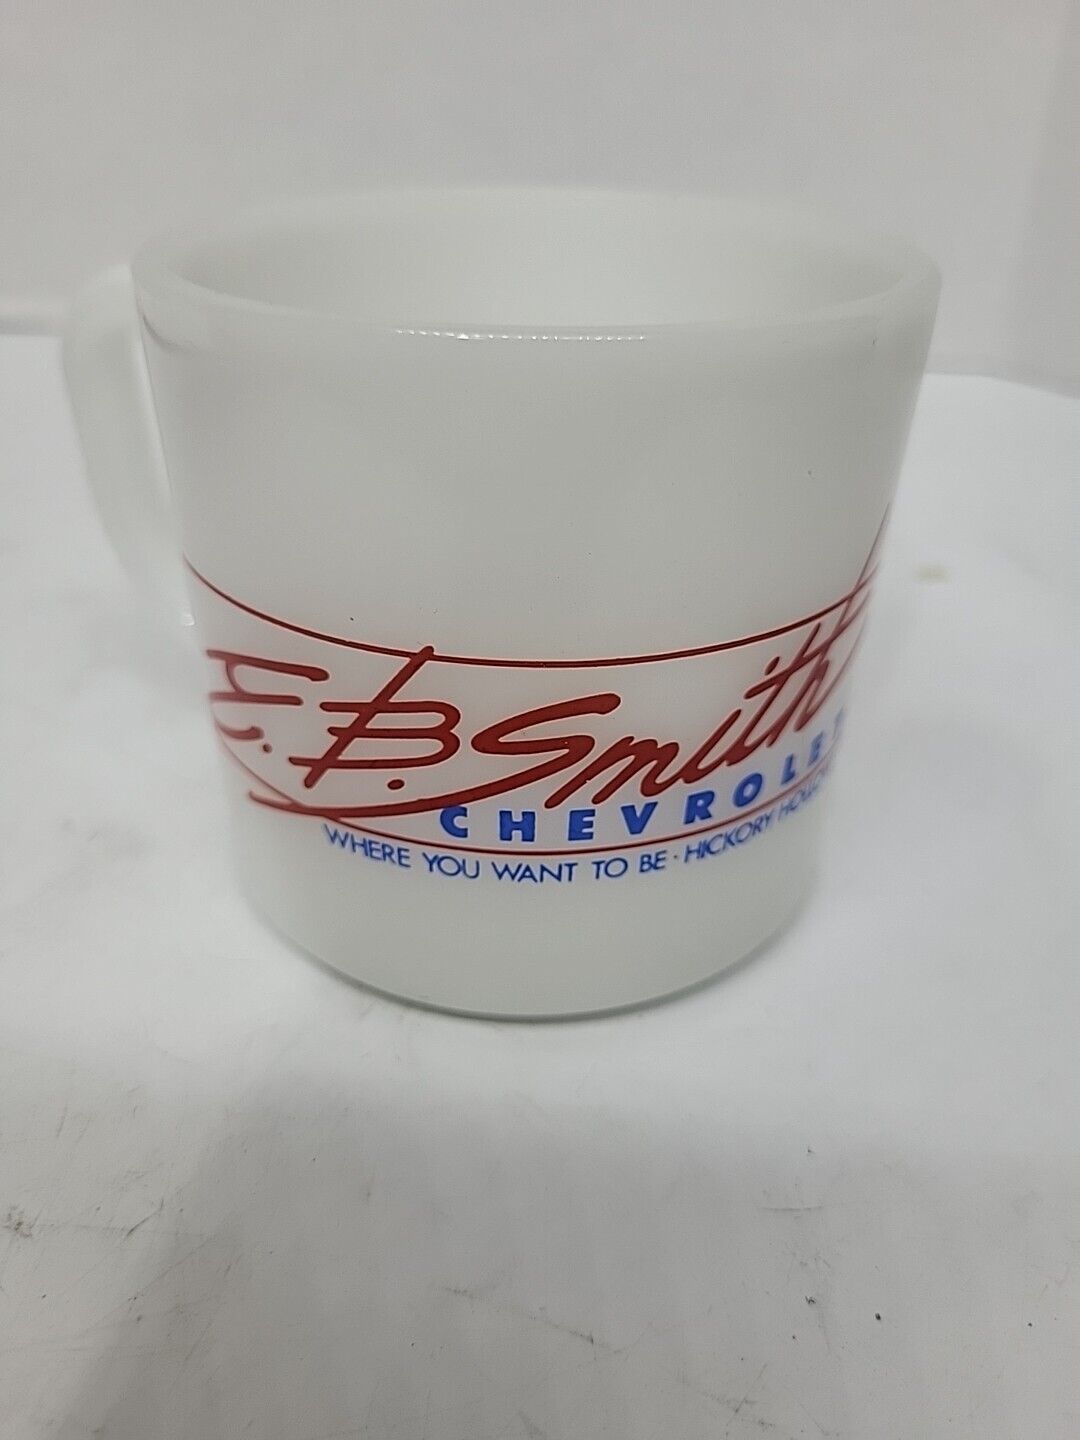 Eb Smith Chevrolet old Hickory Tennessee coffee mug